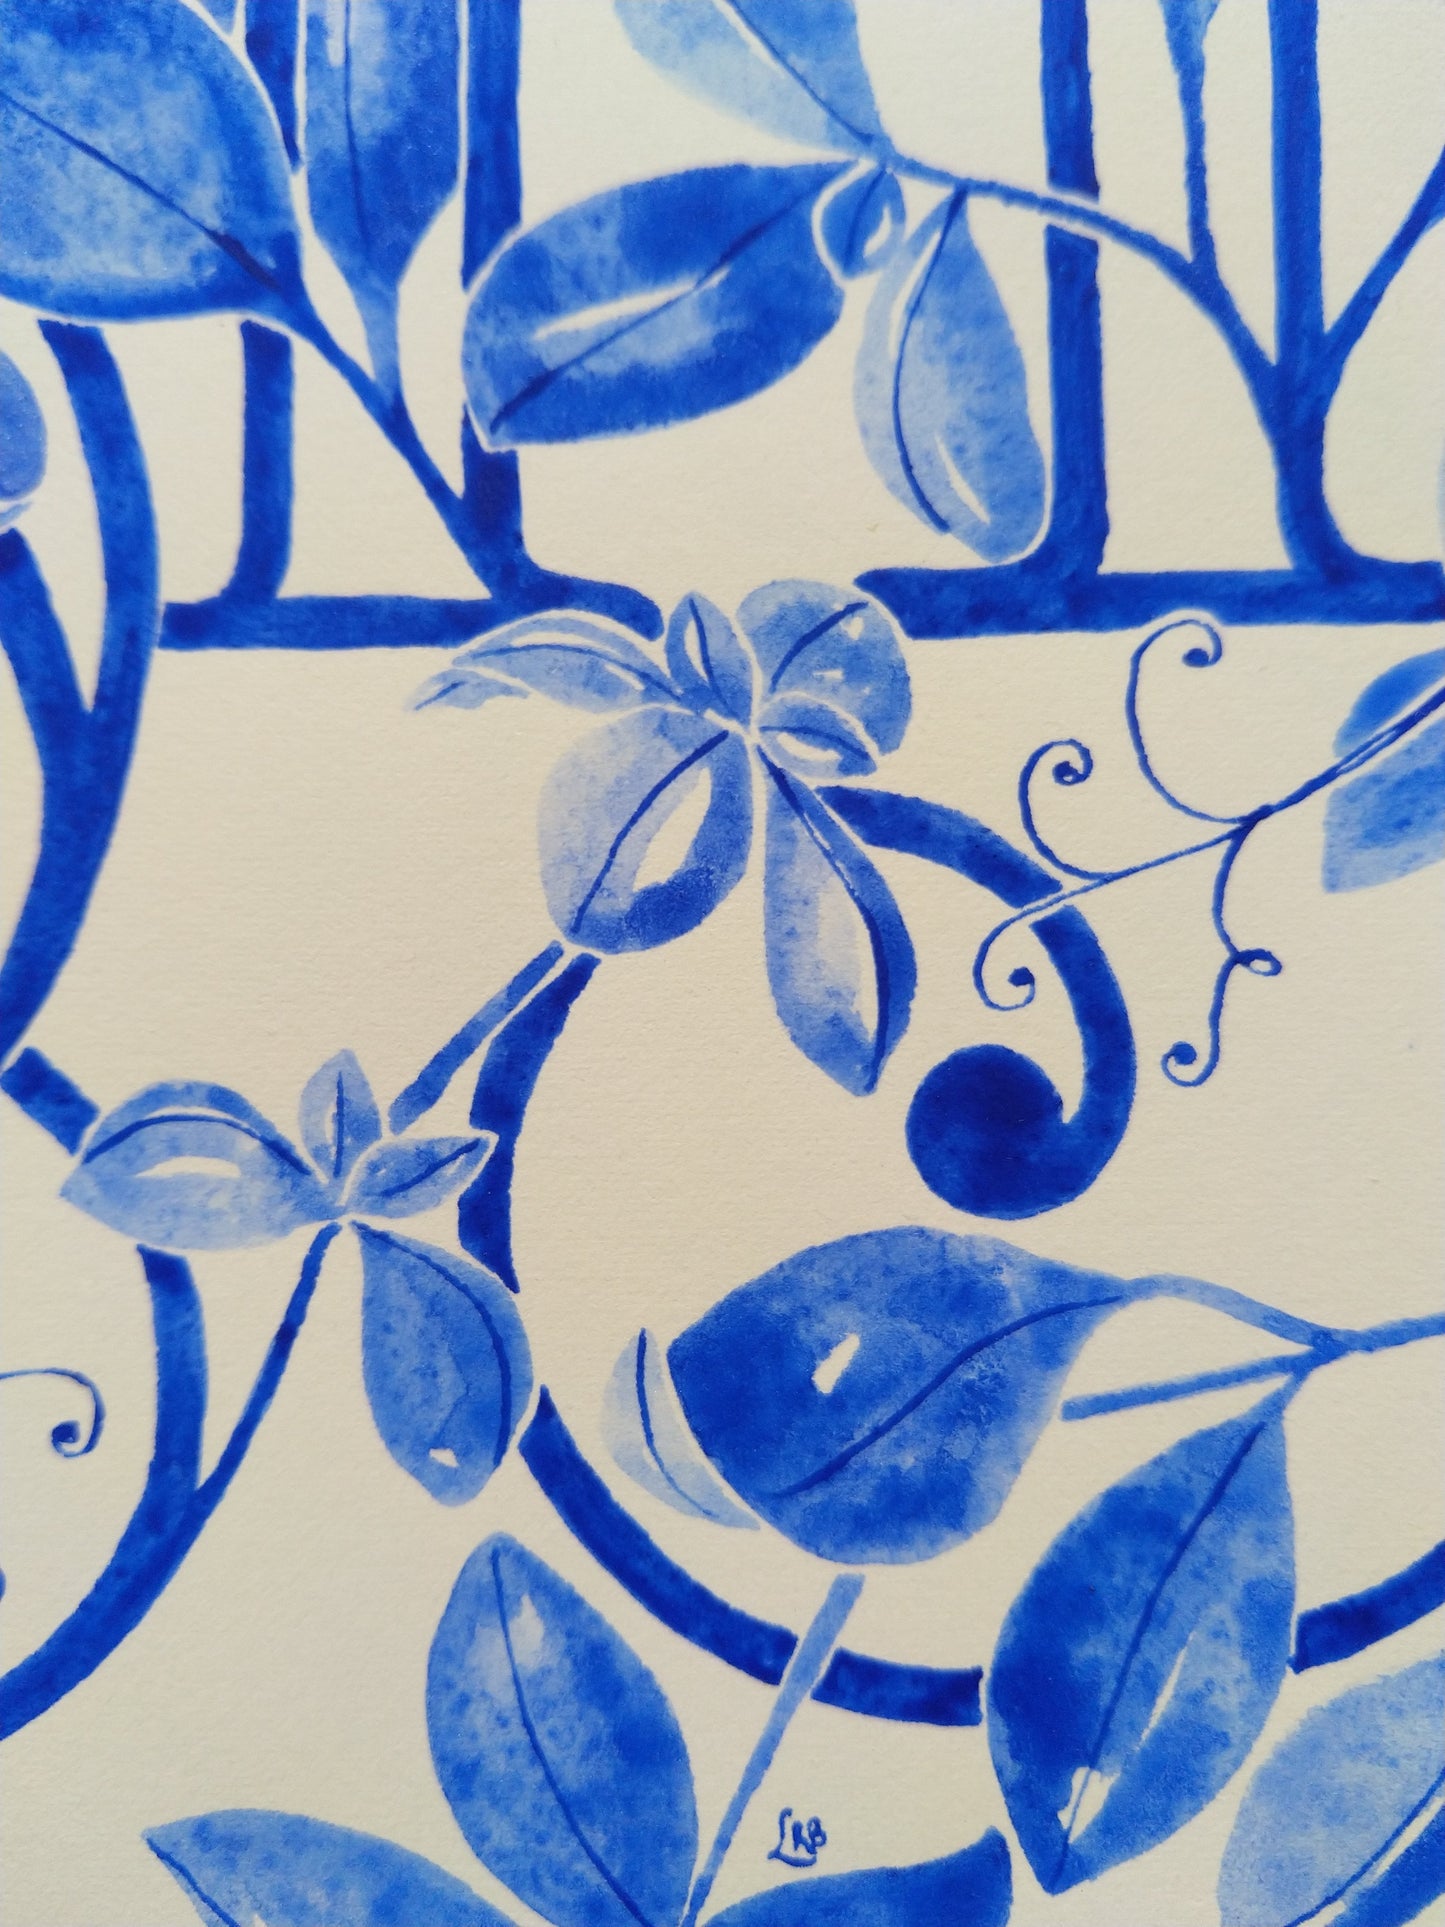 Watercolour Print - Generosity. A study in Cobalt Blue.